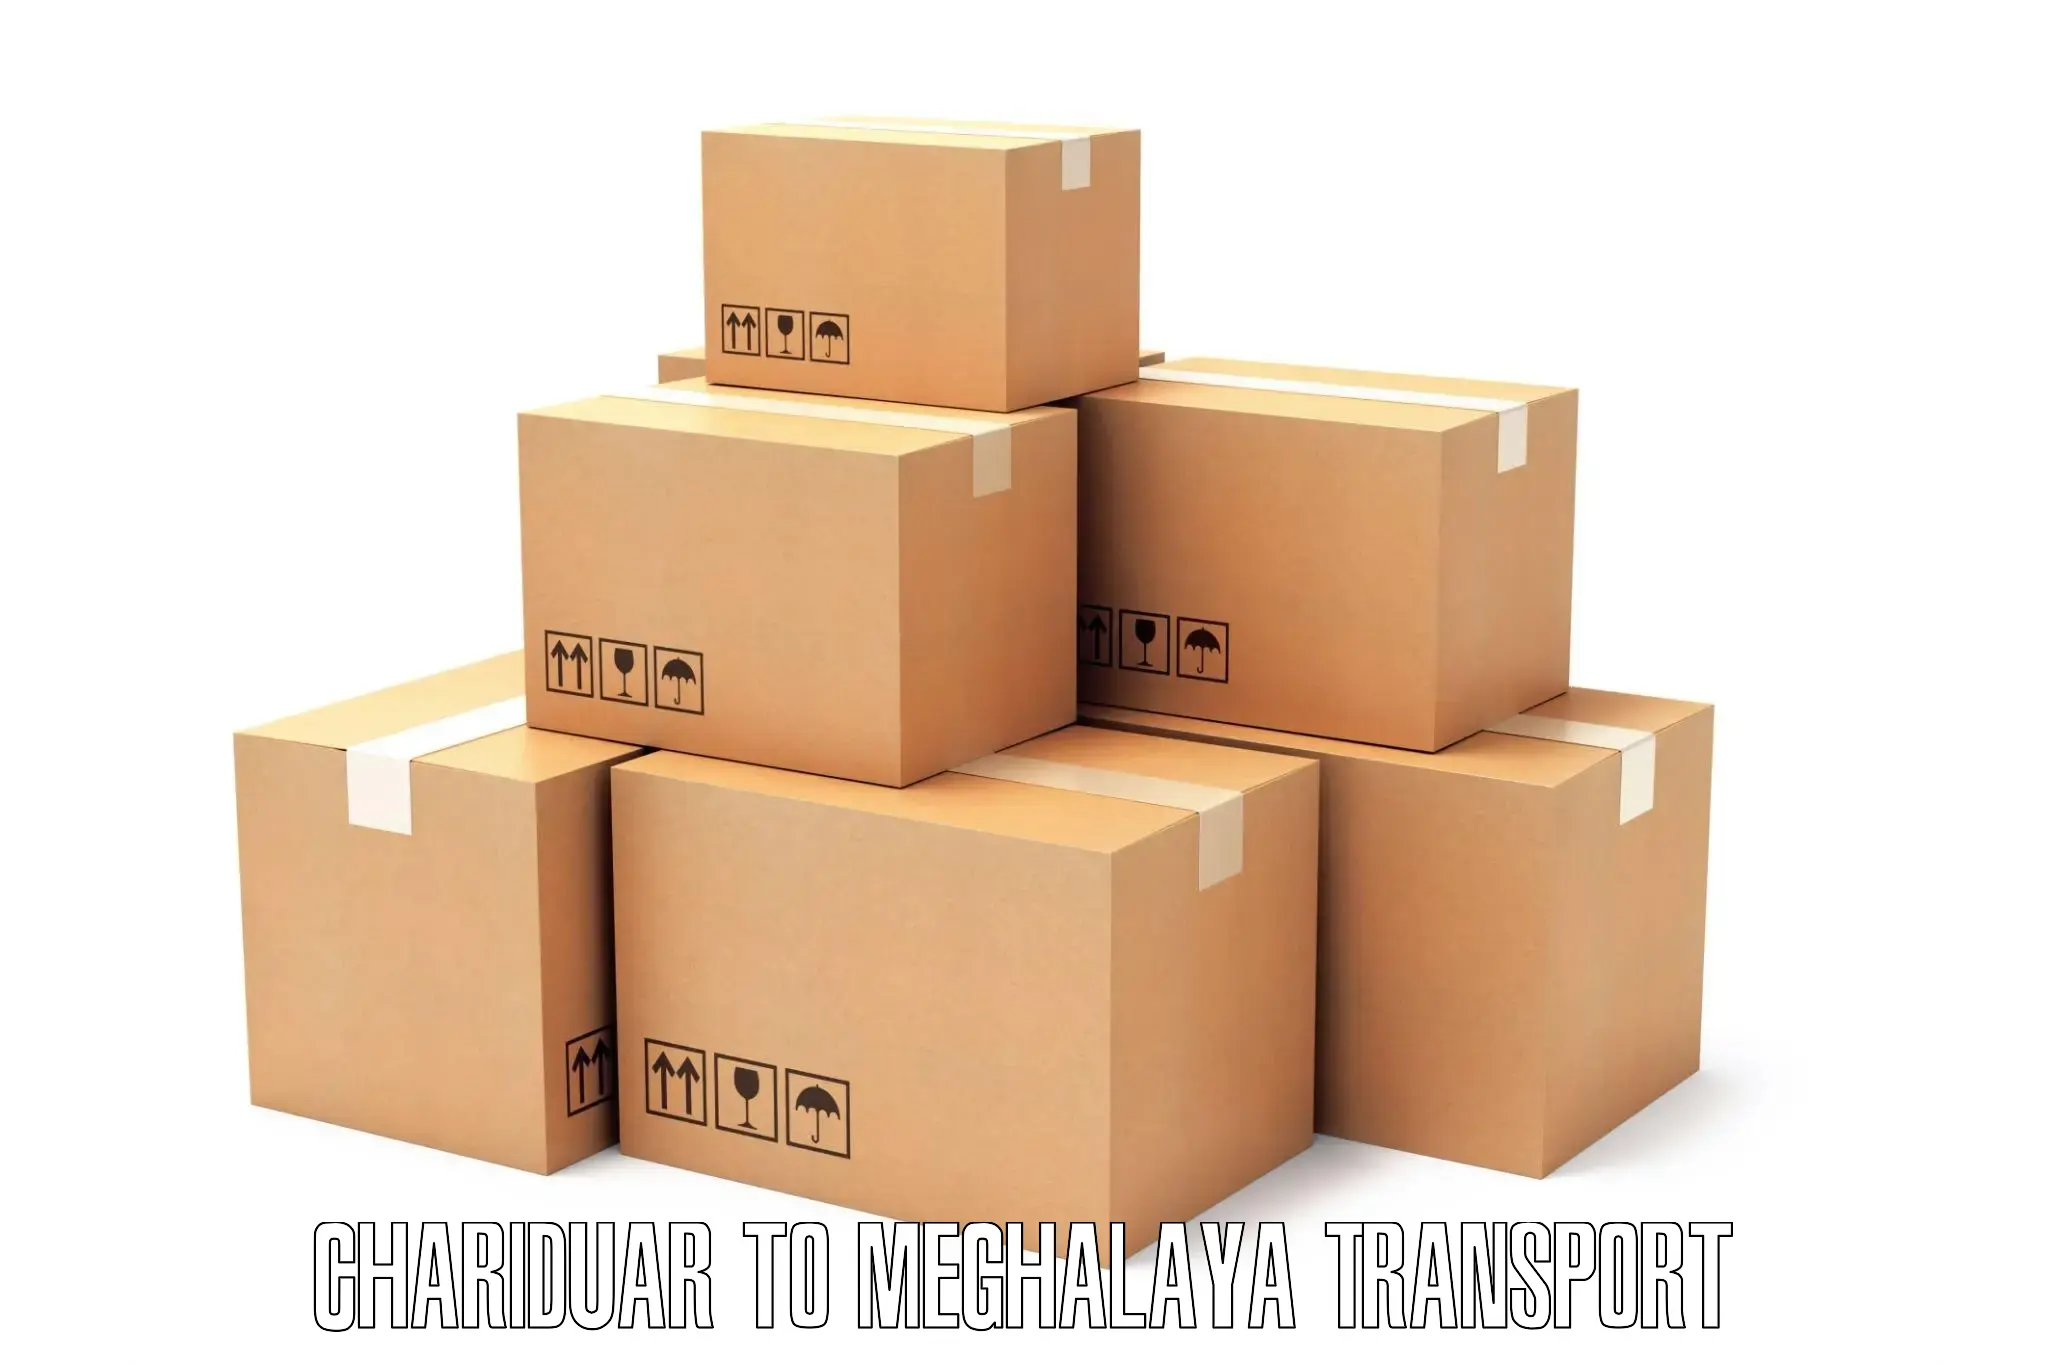 Daily parcel service transport Chariduar to Meghalaya